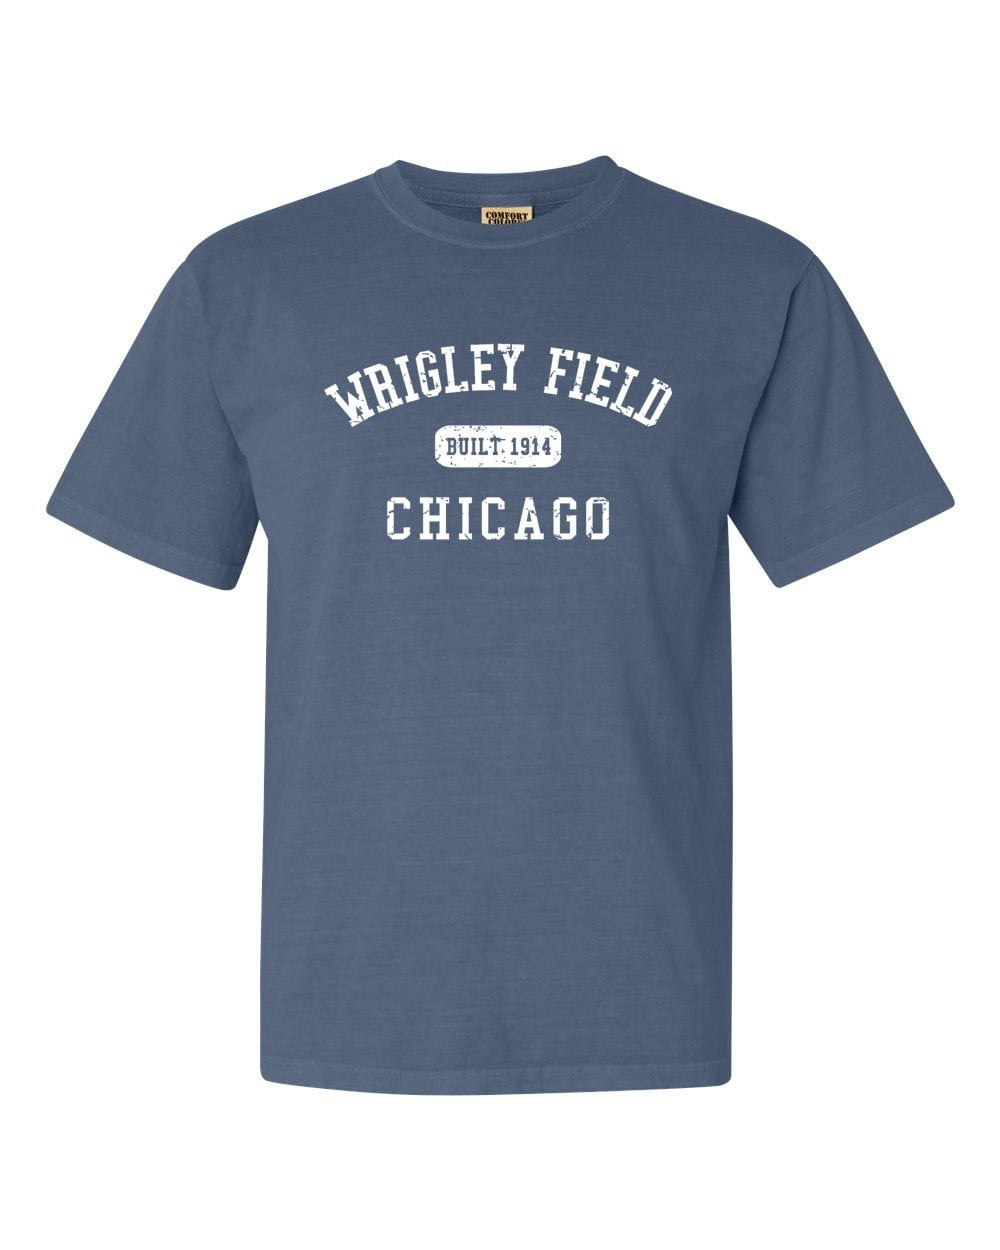 wrigley field shirt